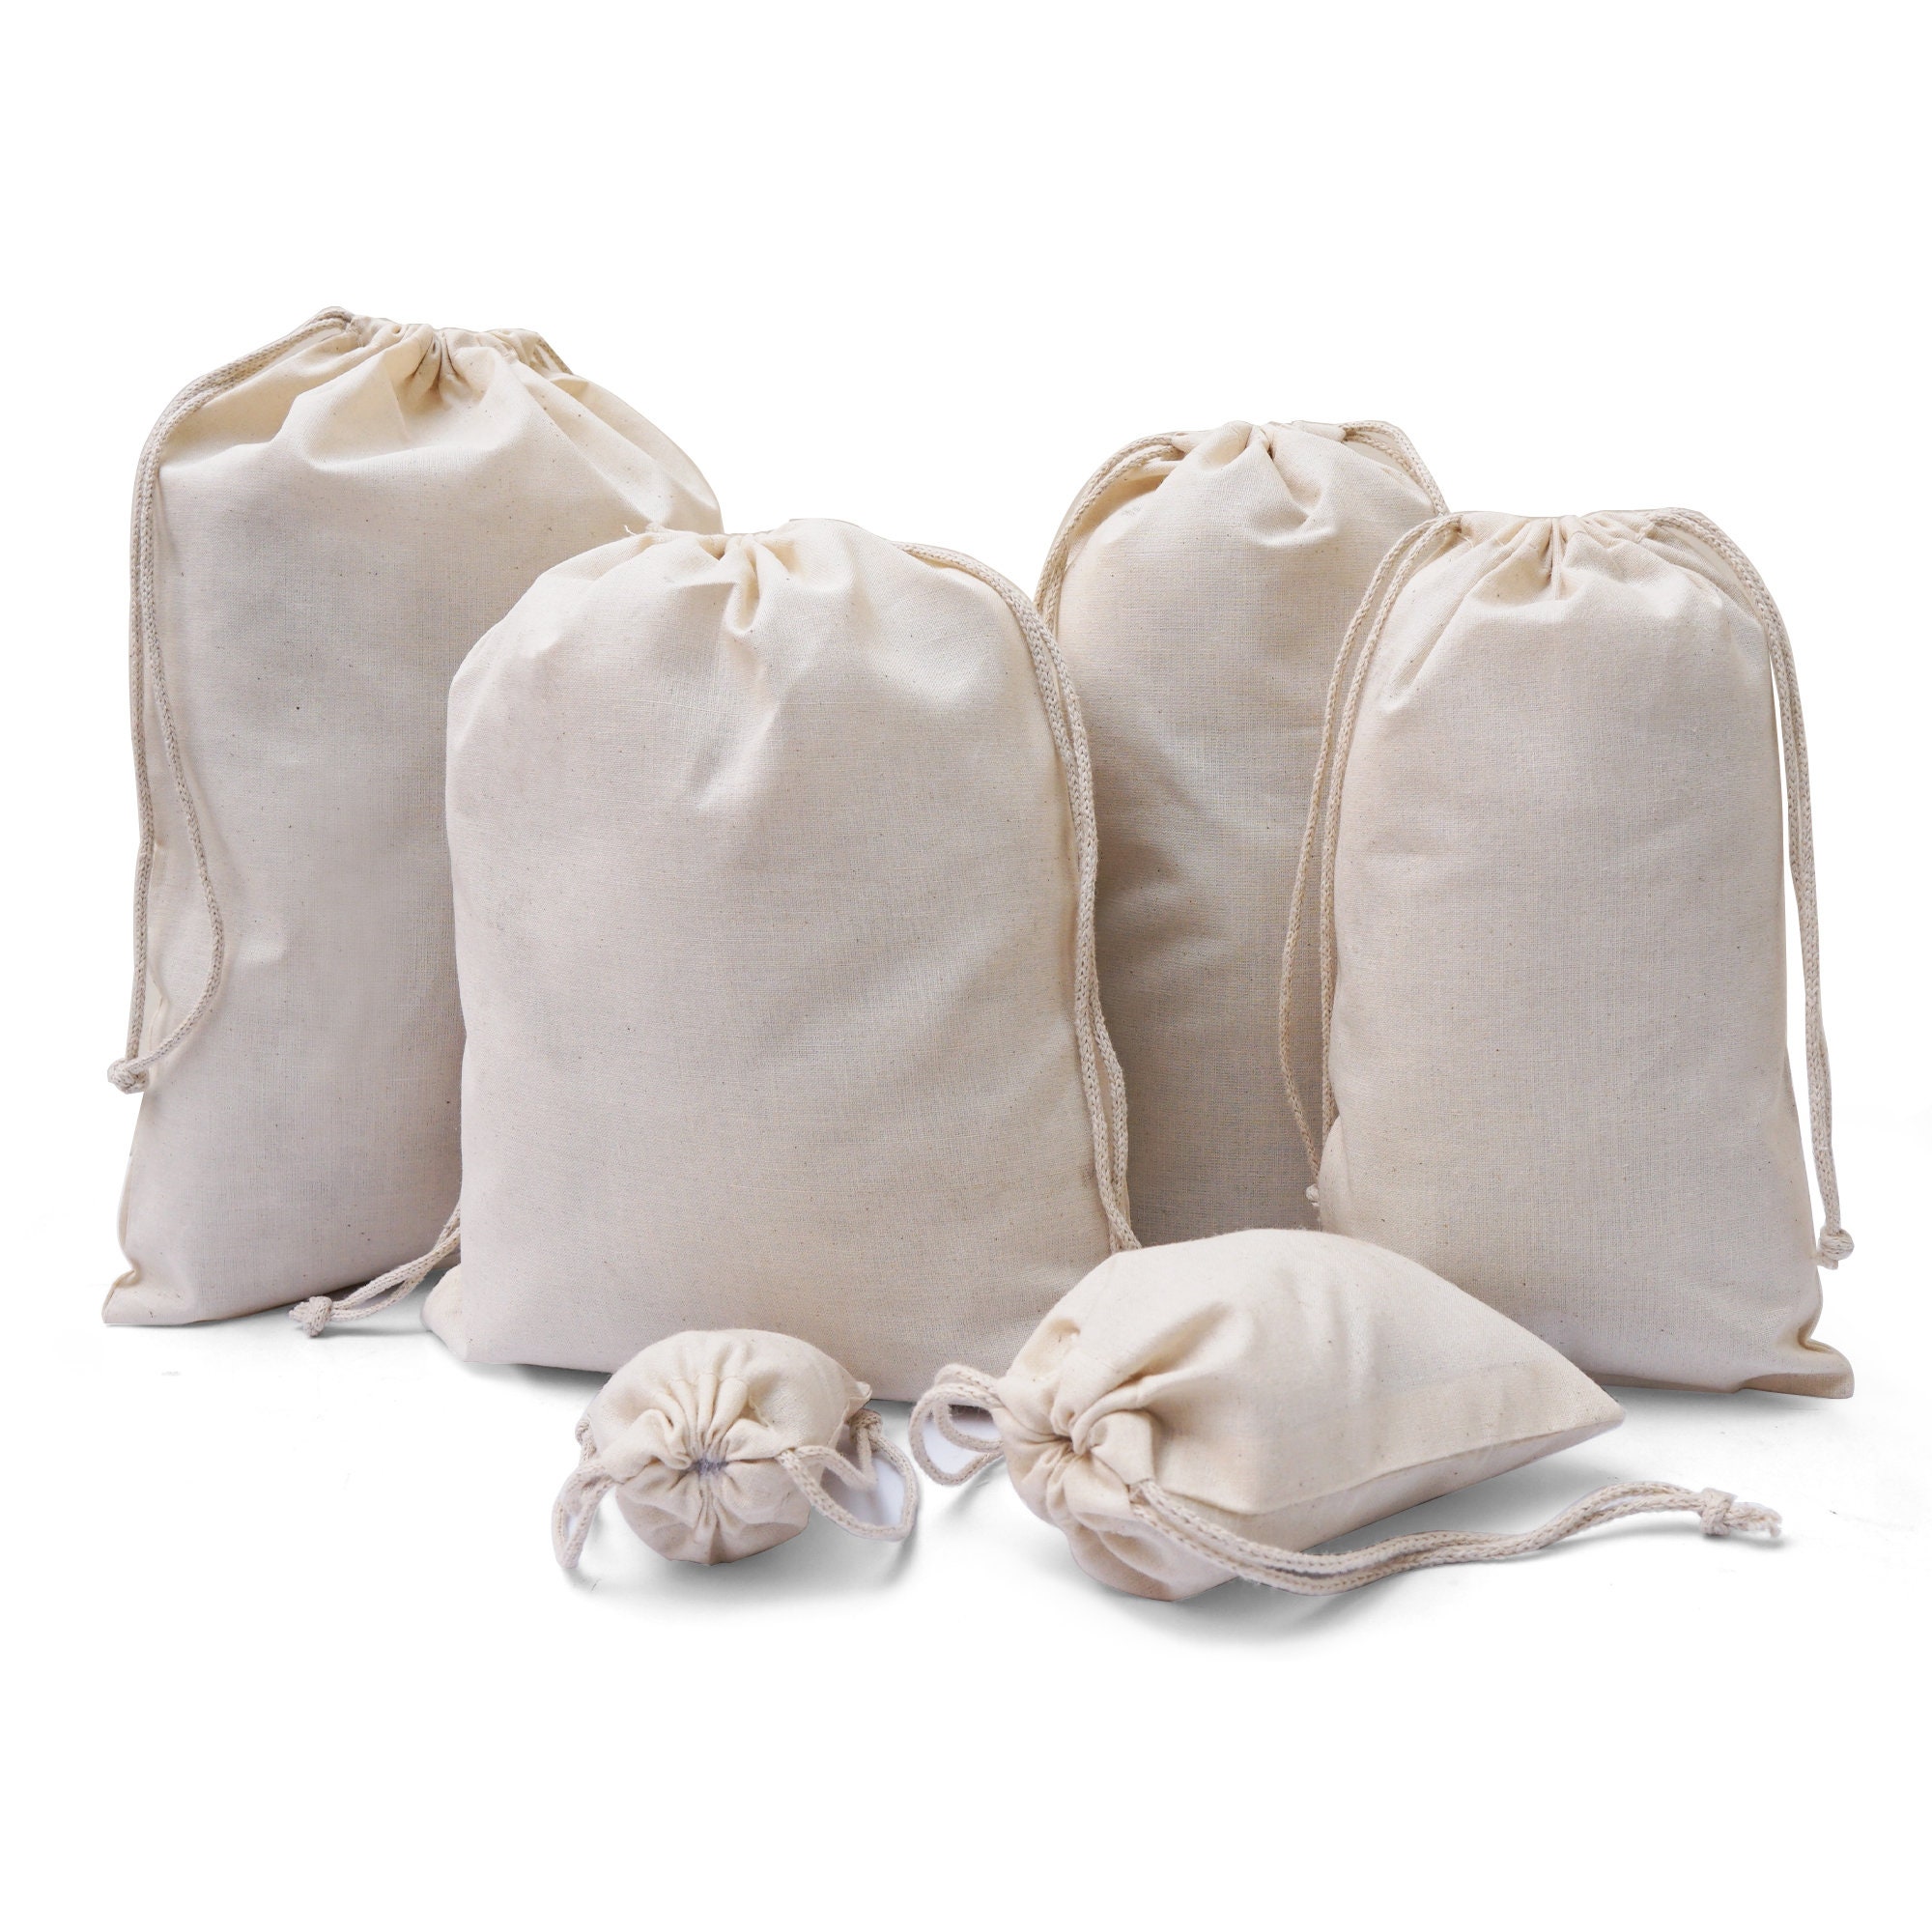 Acid Free Storage Bag - 25 x 21 x 11 - Innovative Home Creations - –  Keepsake Quilting